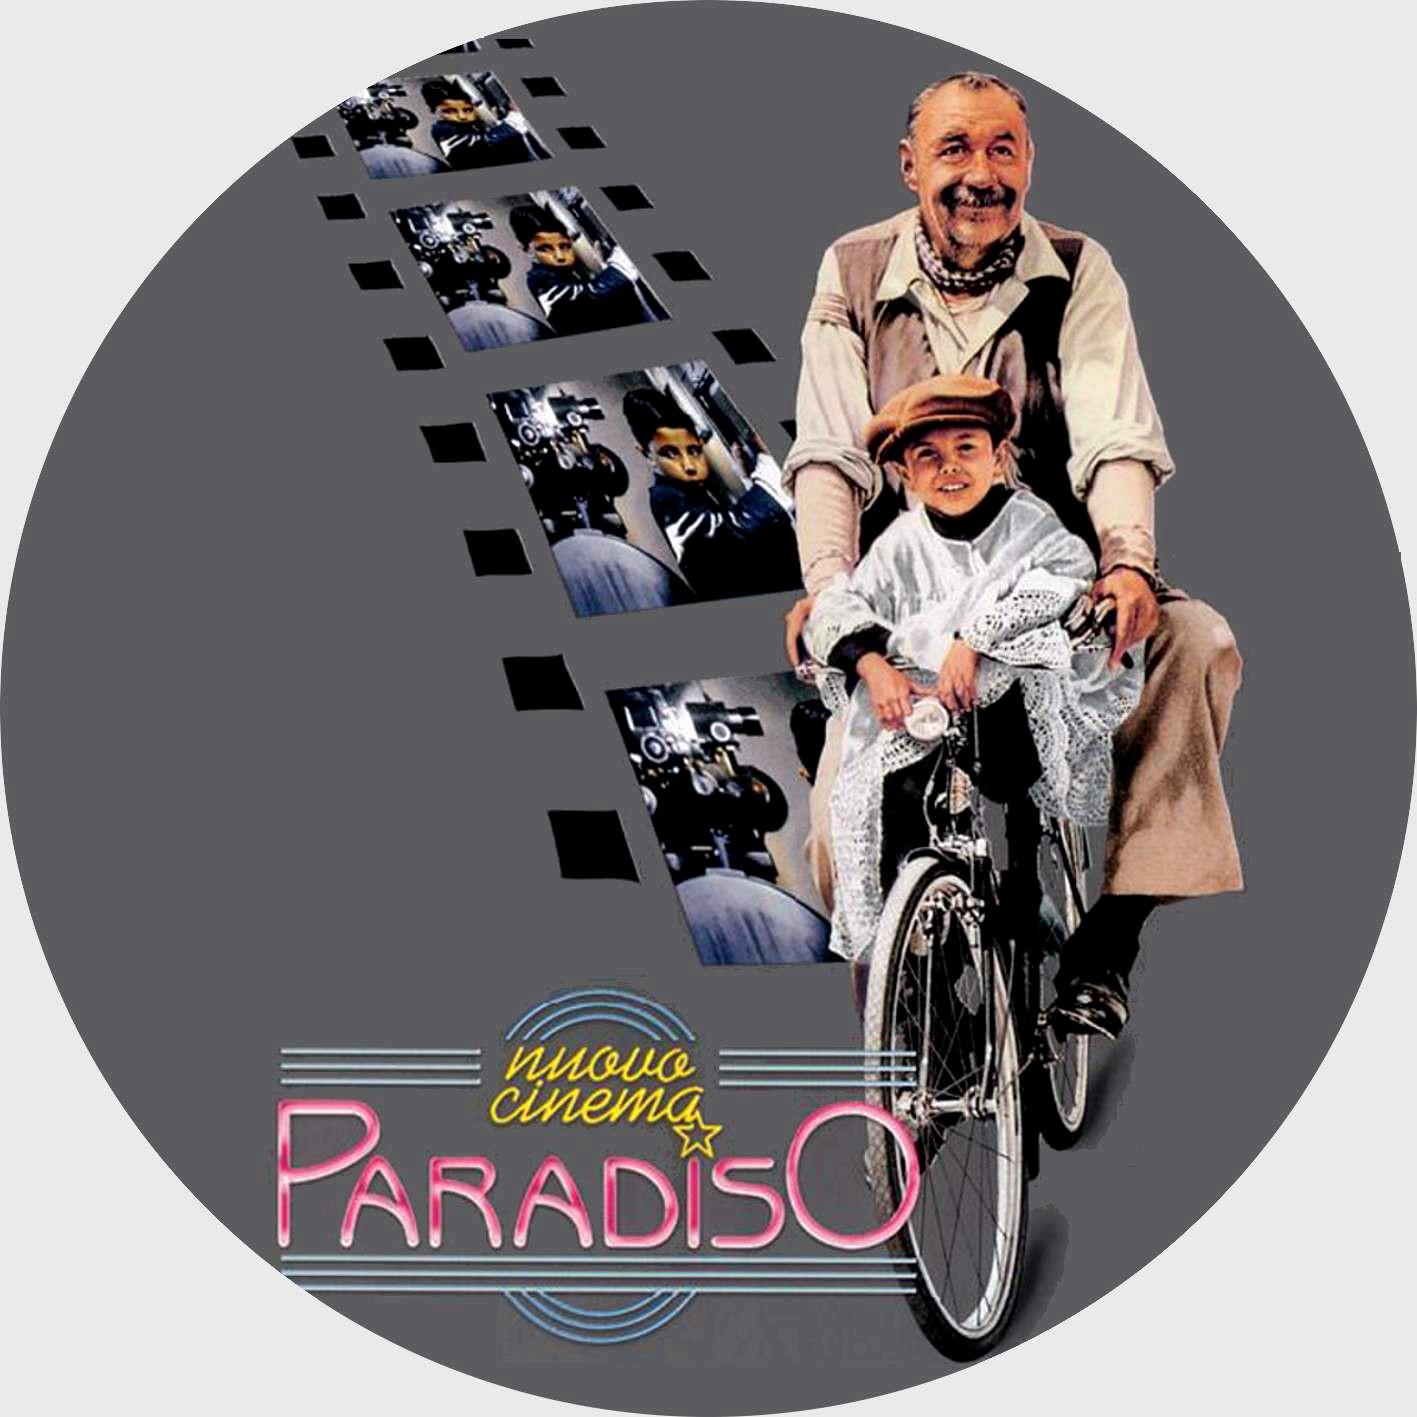 Cinema Paradiso (id: 98885)